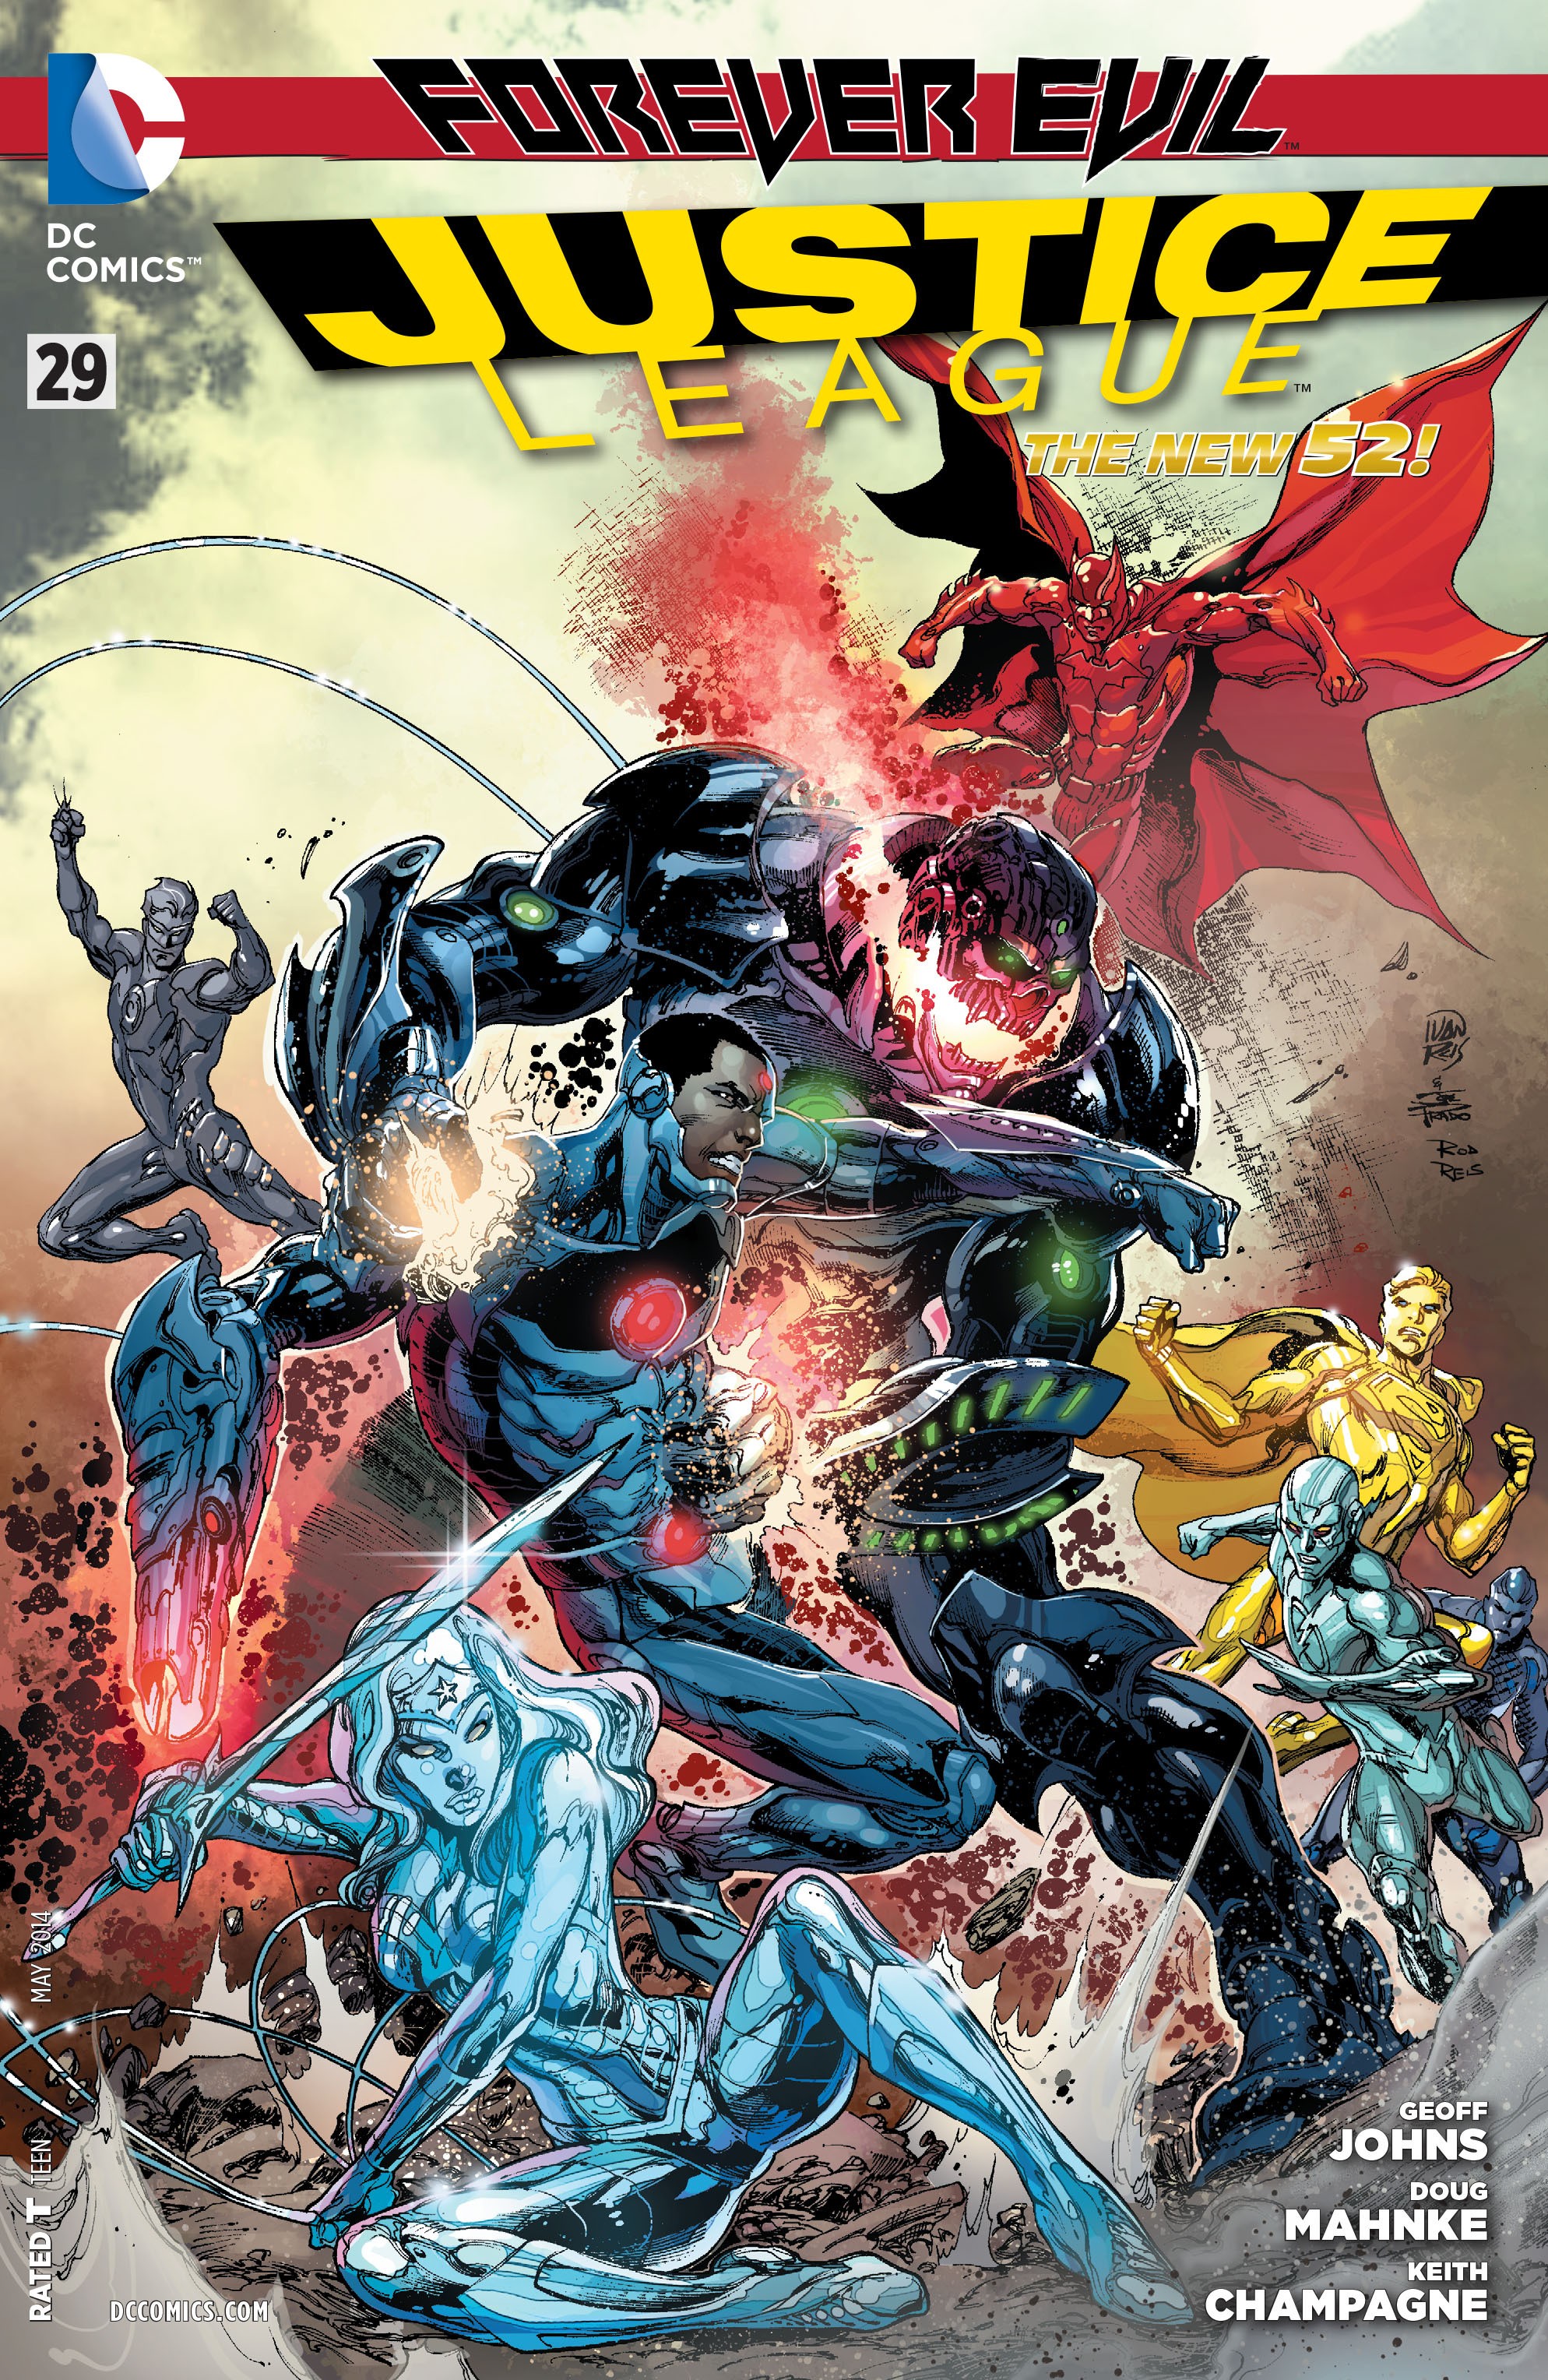 Justice League Vol. 2 #29